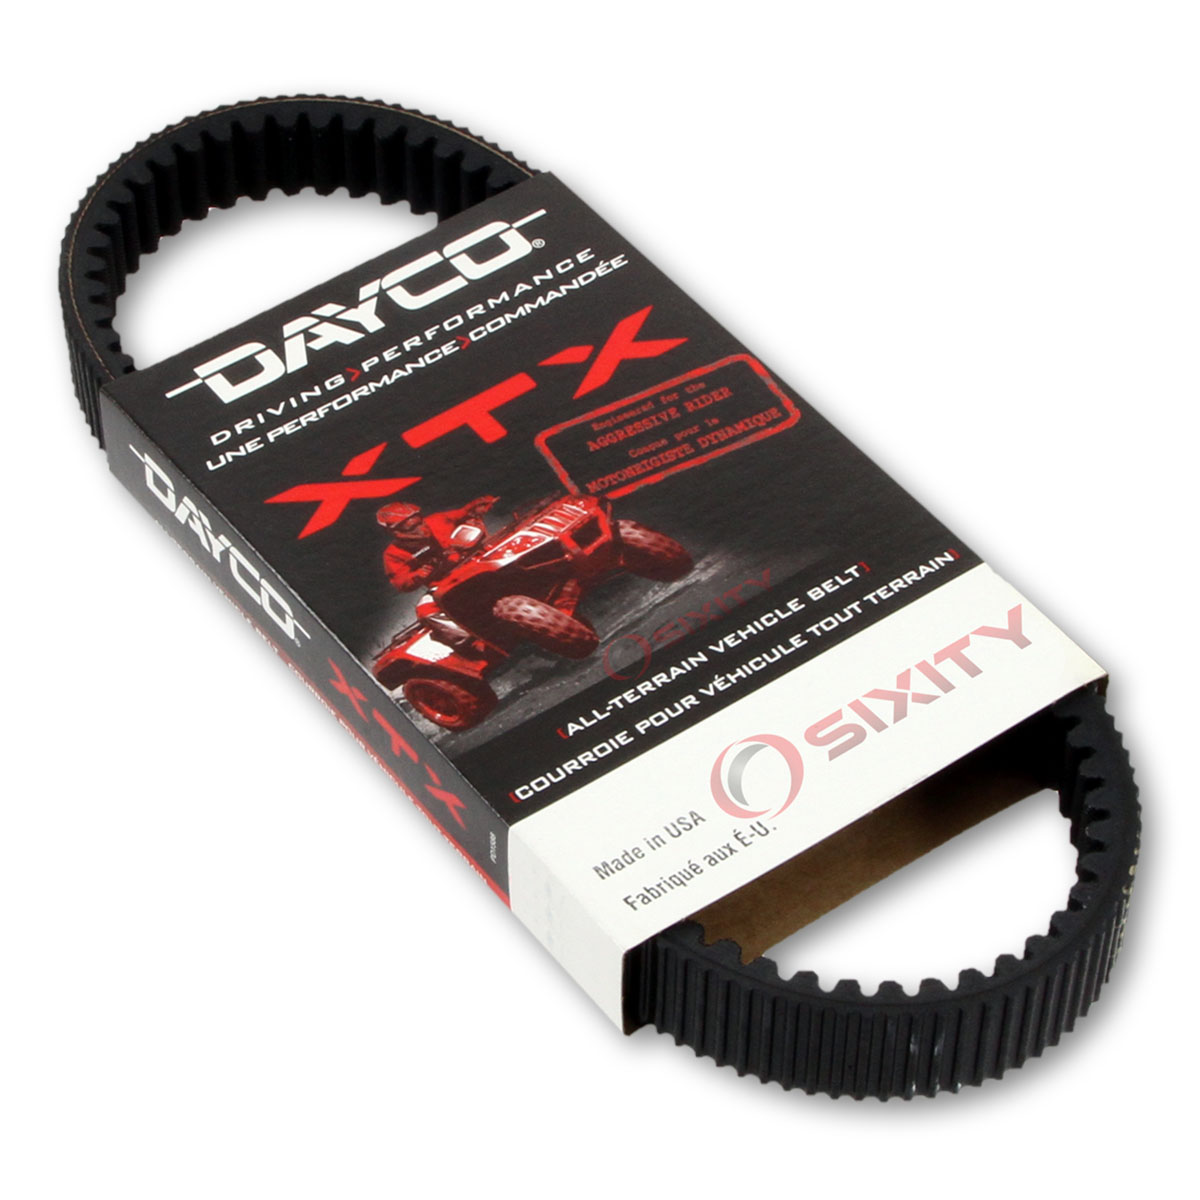 Dayco XTX Drive Belt for 2011-2015 Arctic Cat 450 - Extreme Torque CVT